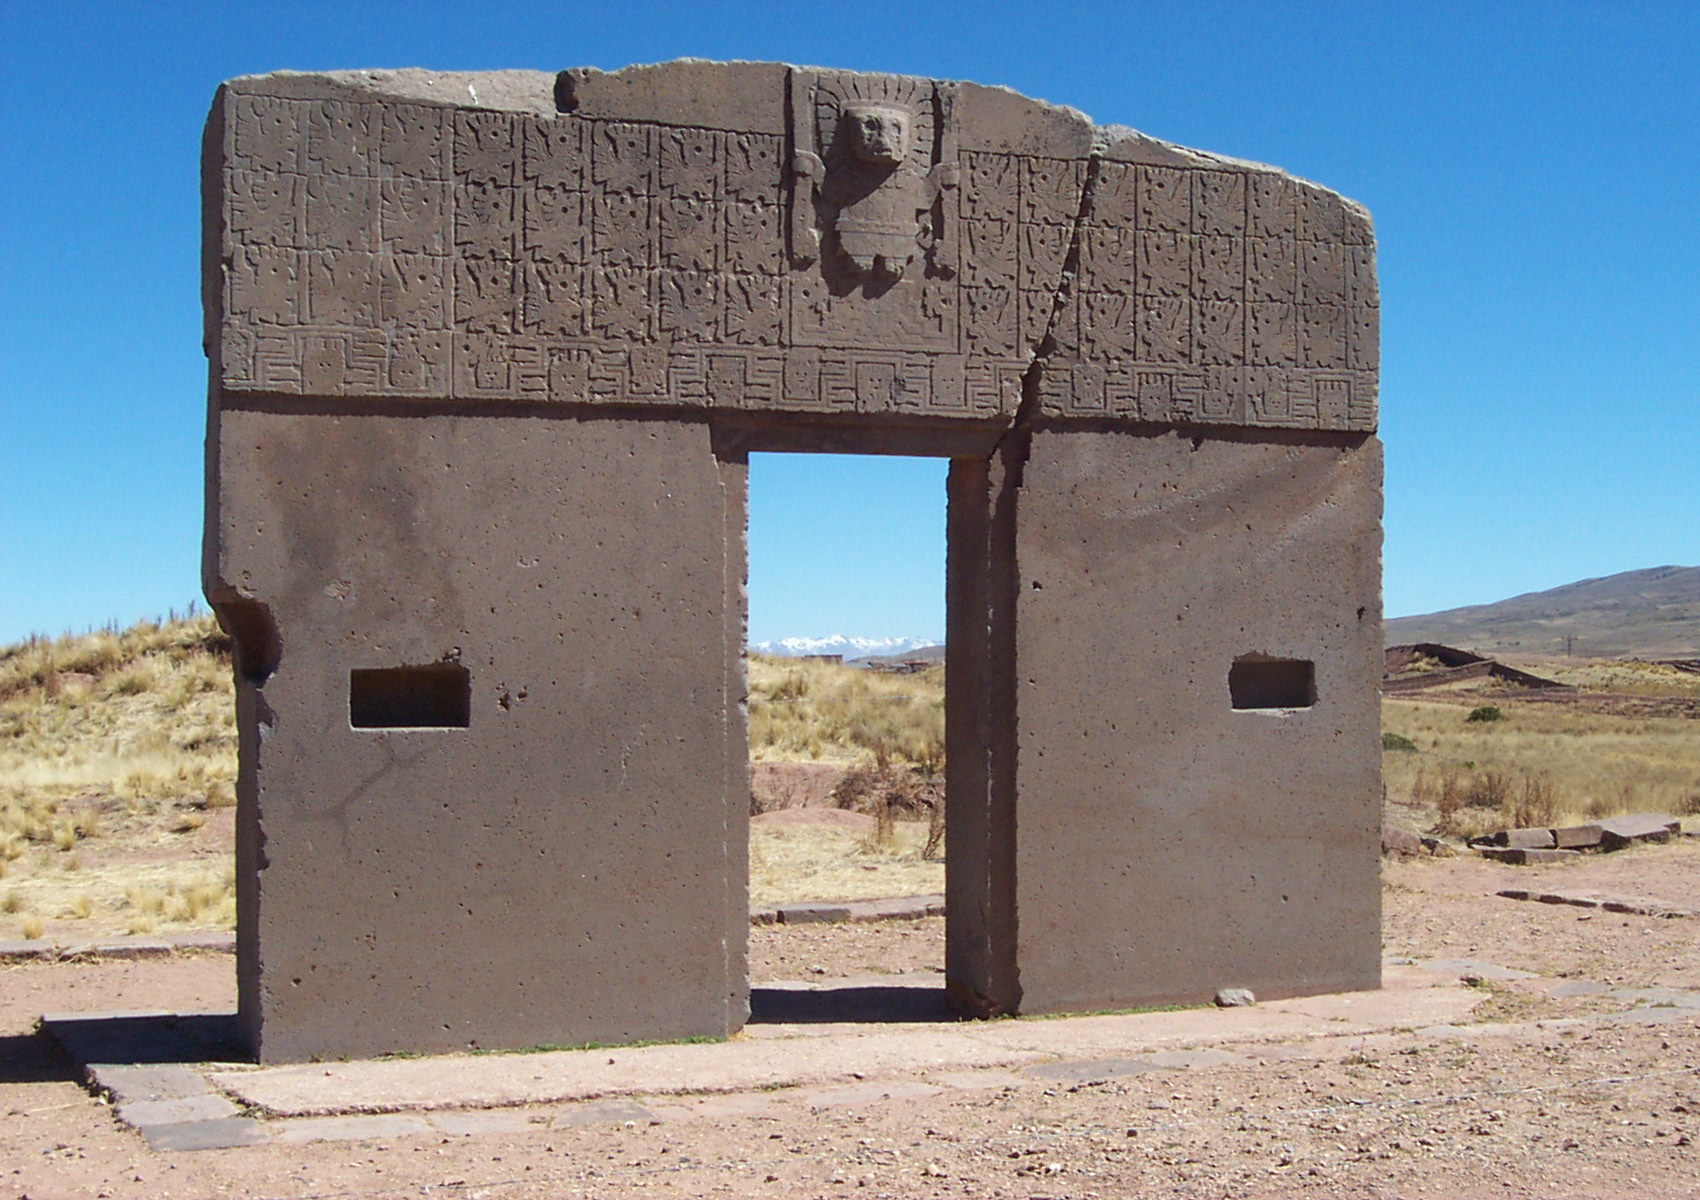 61aee18e86c93_Tiwanaku_PorteduSoleil.jpg.a088b8e9fdebdc3585ea84f8192595cd.jpg